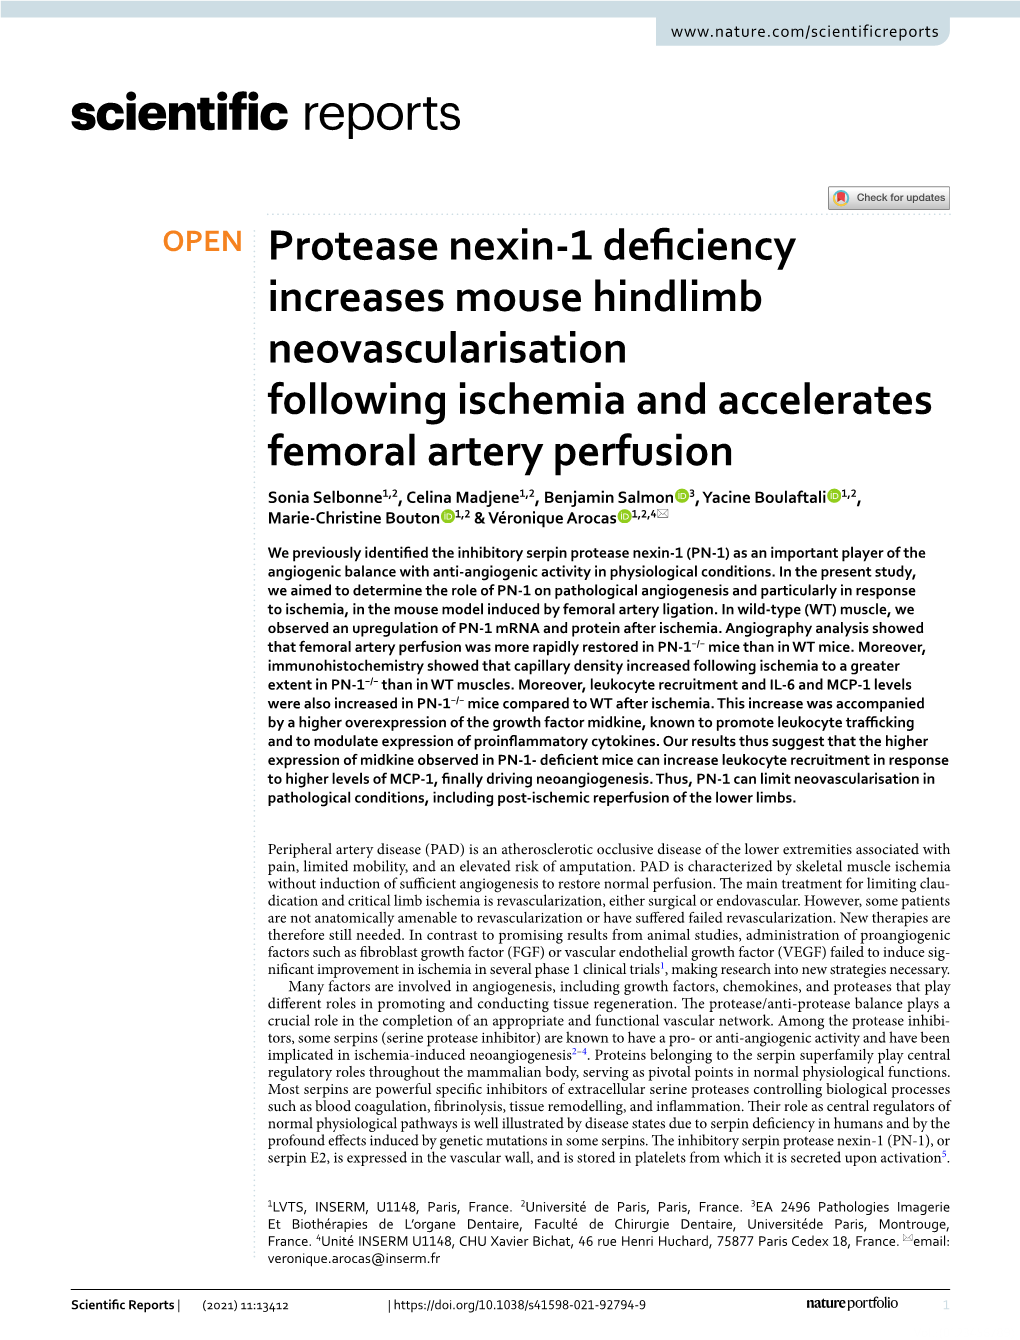 Protease Nexin-1 Deficiency Increases Mouse Hindlimb